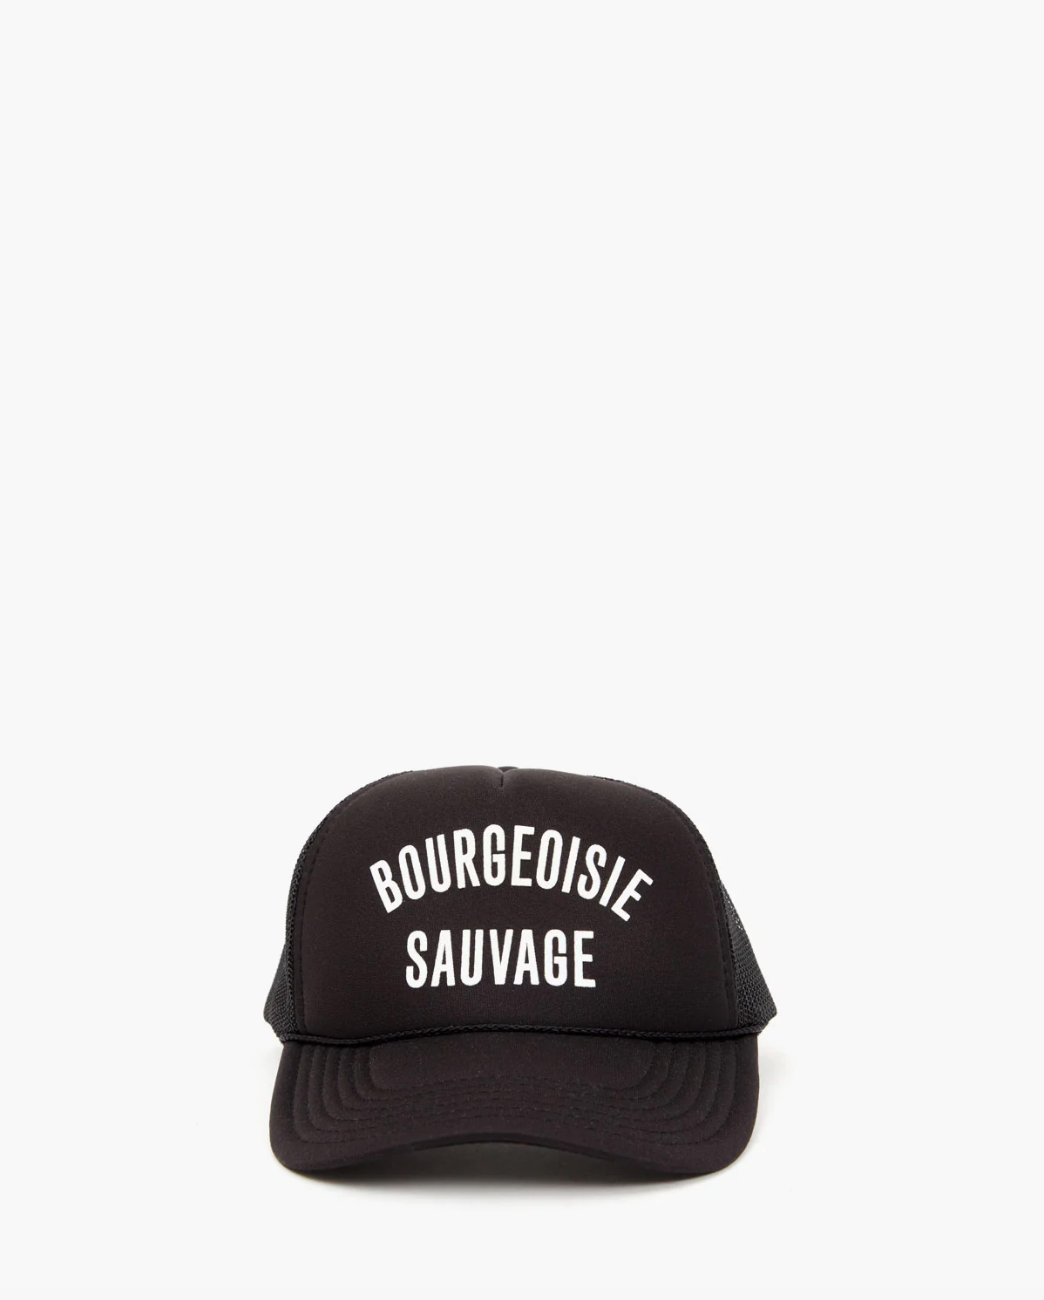 Clare V | Bourgeoisie Sauvage Trucker Hat - Black